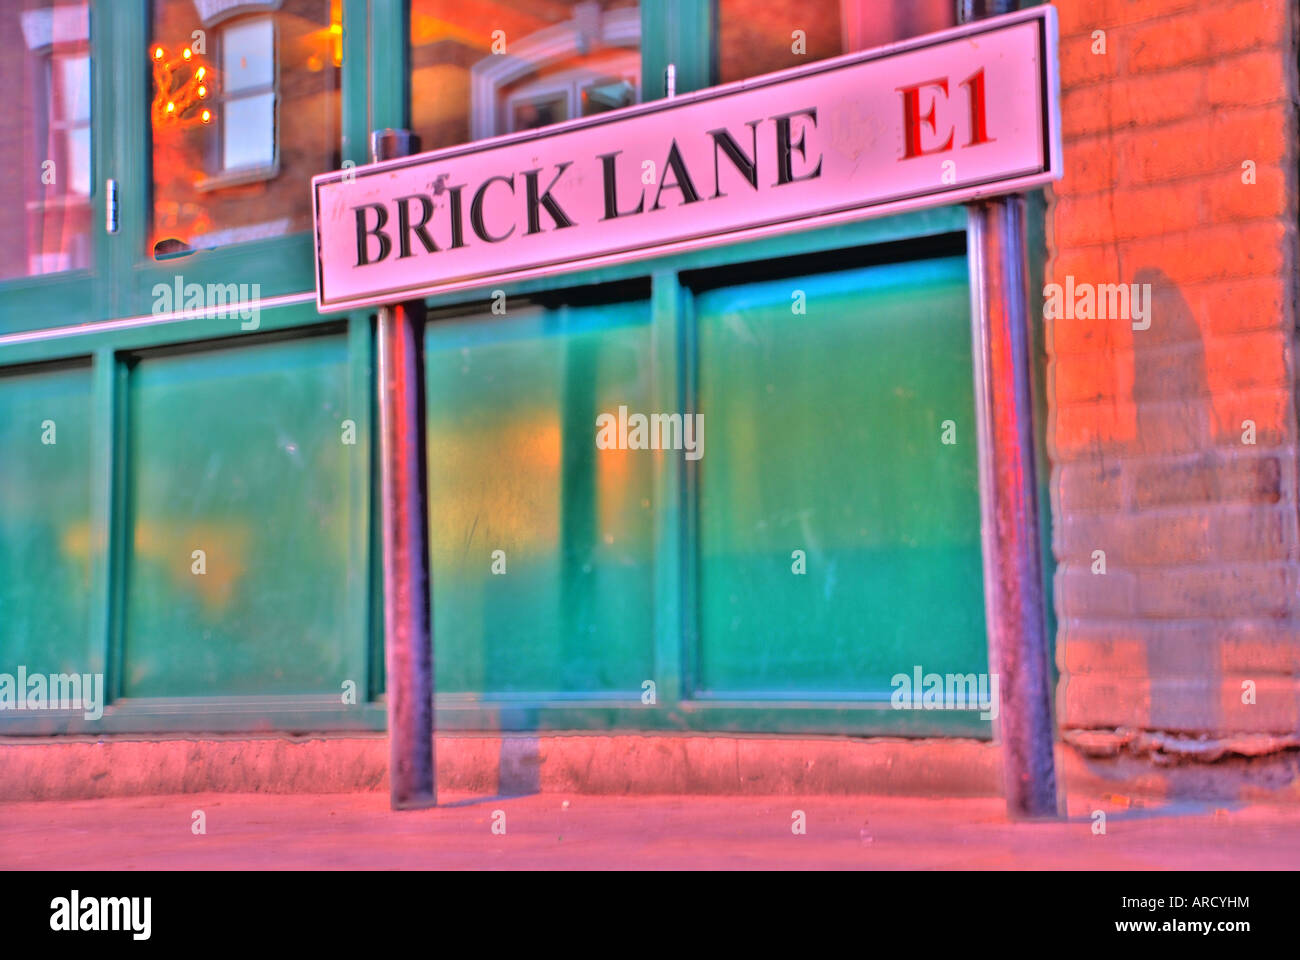 Brick Lane E.I. street sign London Stock Photo